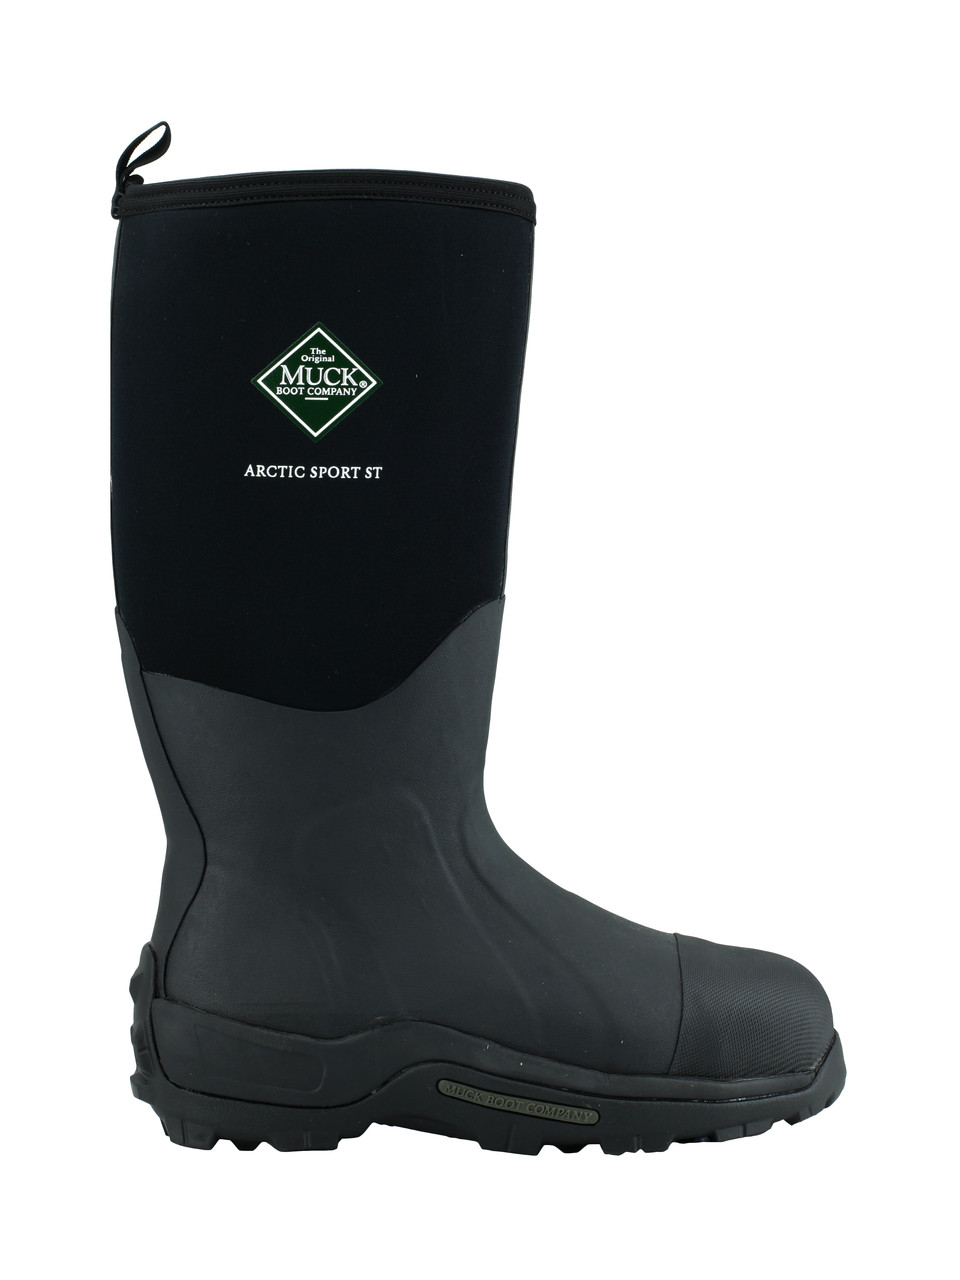 Muck Boots Arctic Sport Steel Toe - ASP-STL - Bridgeport Boots